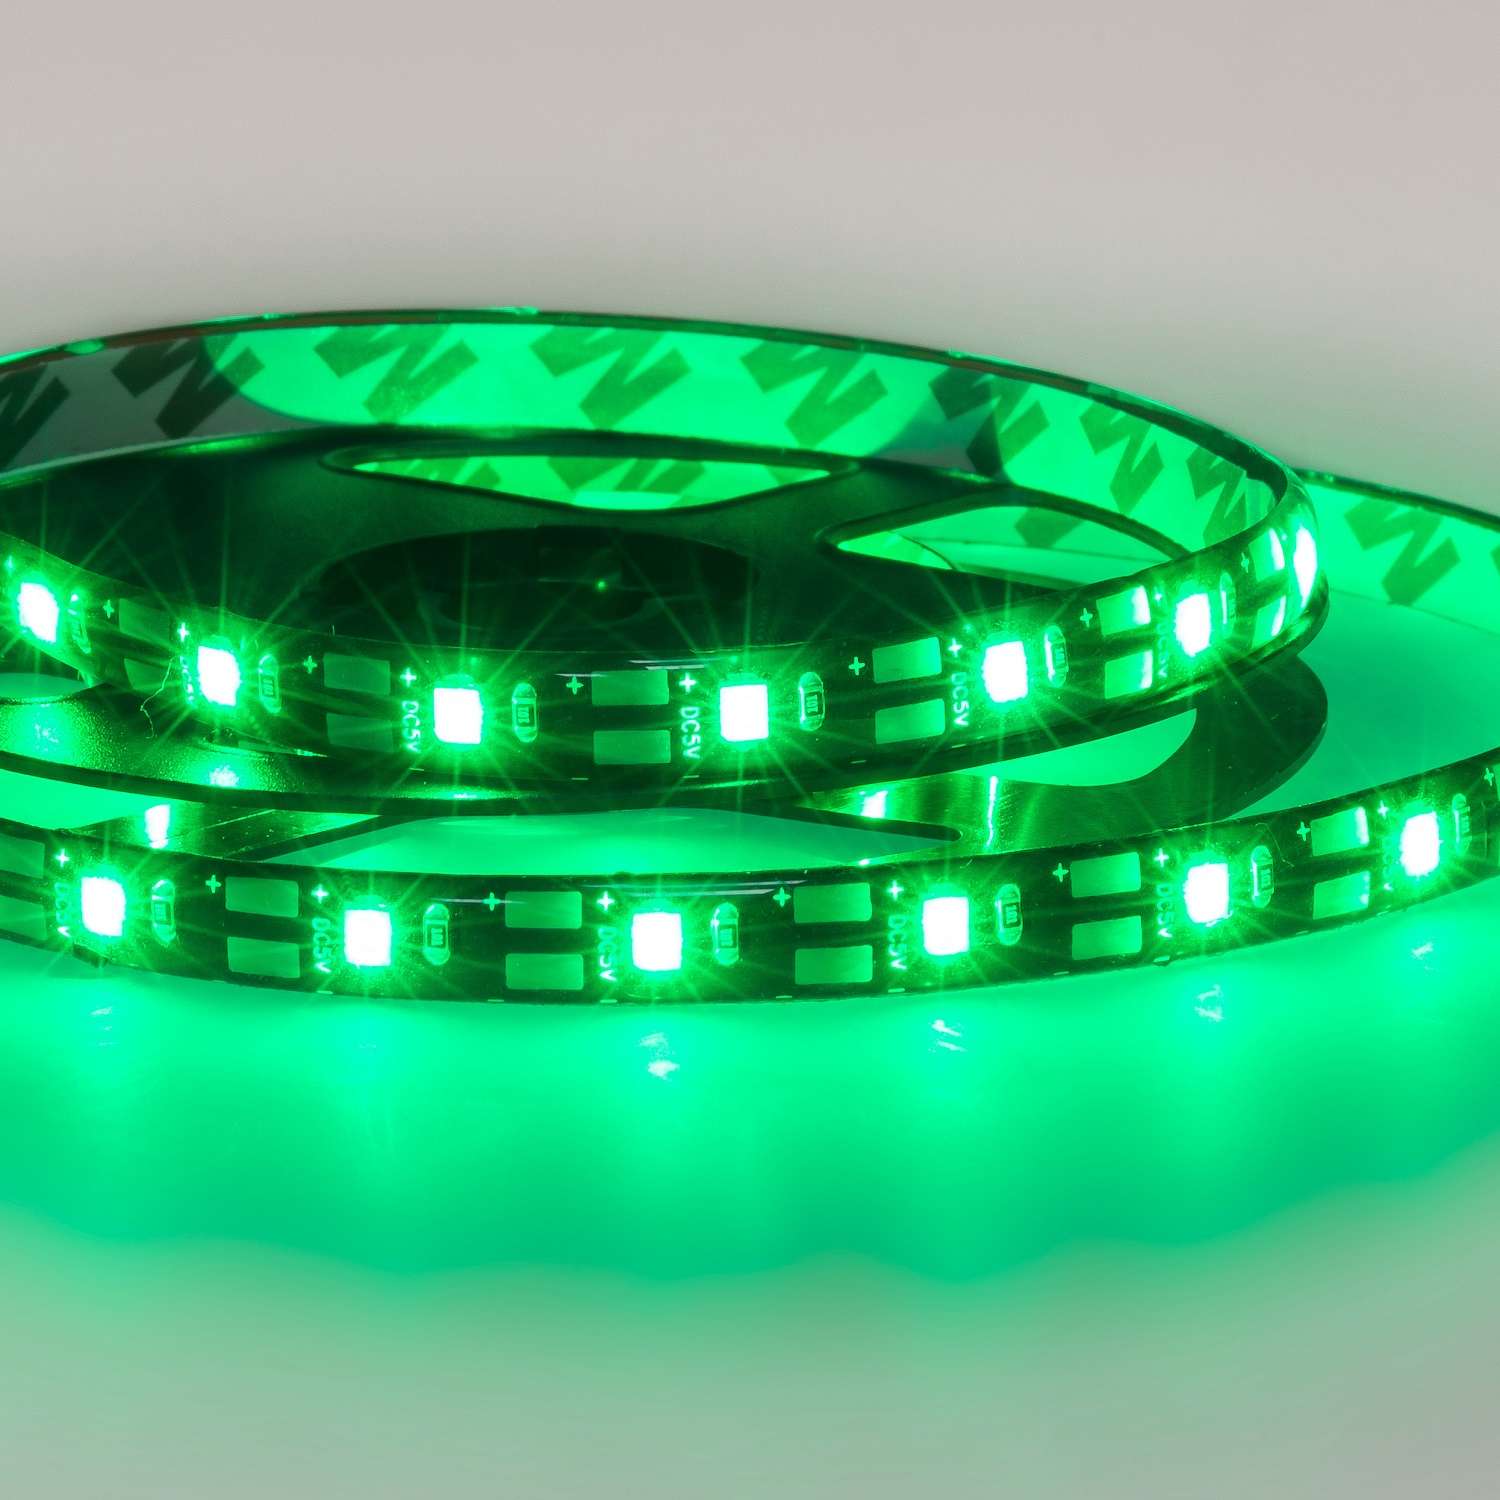 Светодиодная лента LAMPER зеленая USB с клеевым основанием для подсветки телевизора и компьютера 1 метр - фото 5